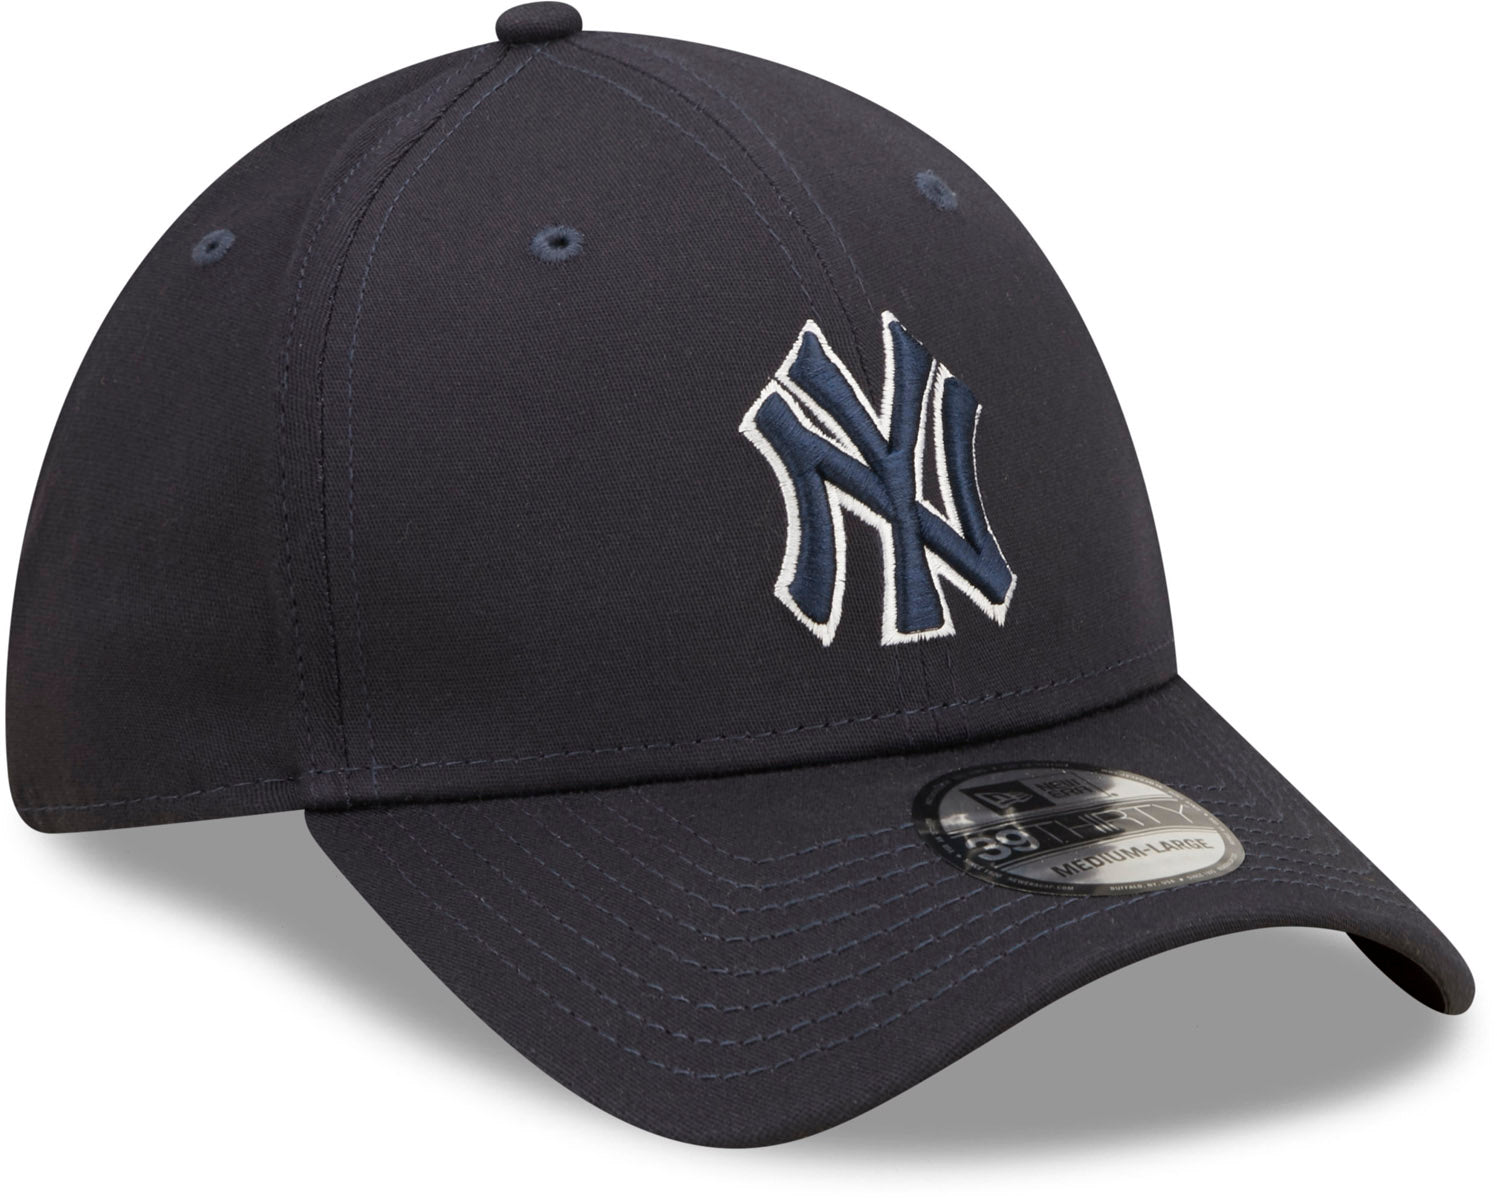 New Era Men's New York Yankees 39Thirty Classic Navy Stretch Fit Hat